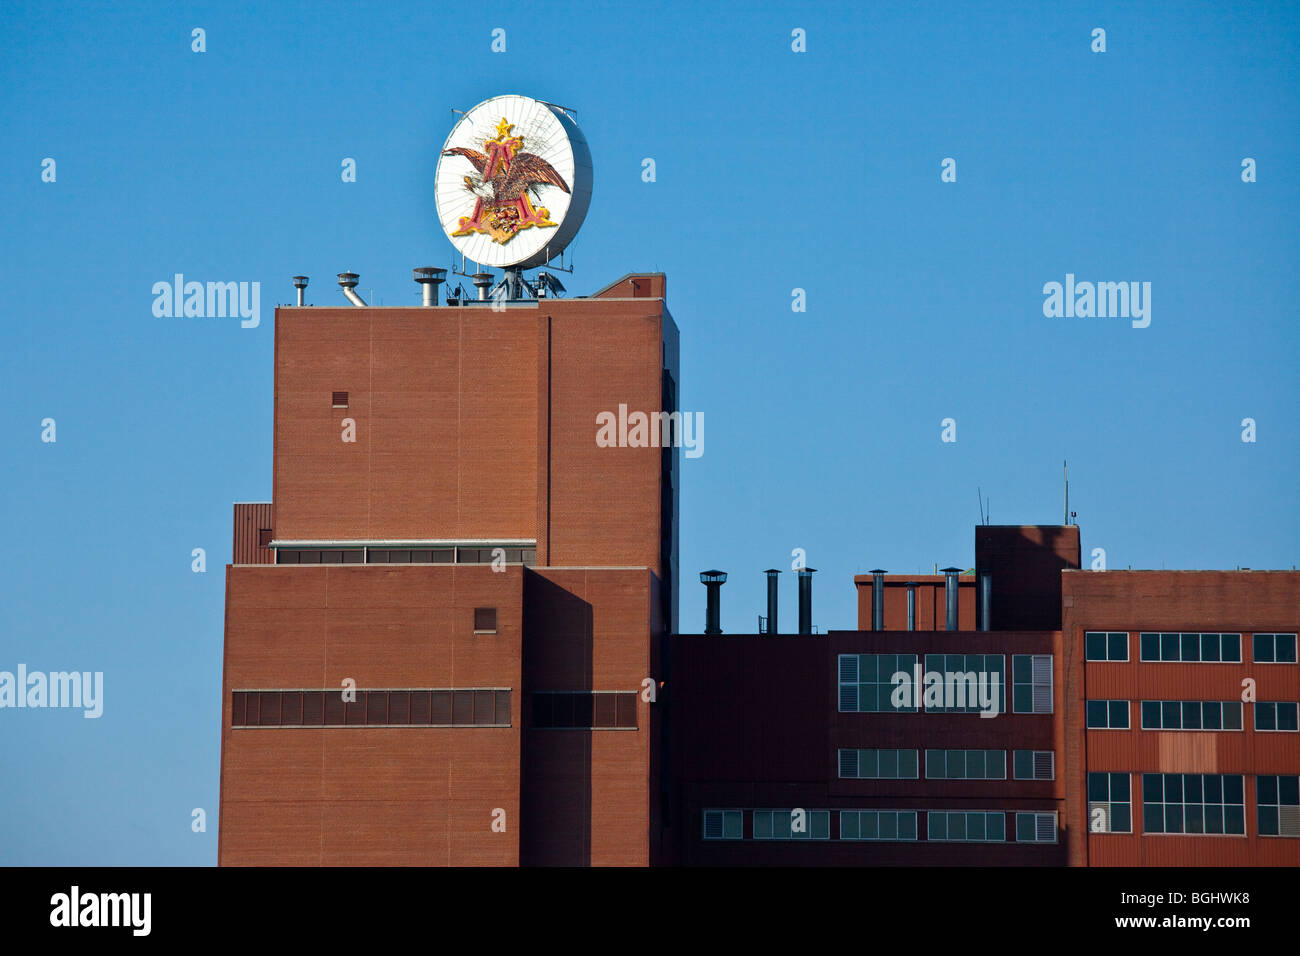 Anheuser Busch Brewery in Newark New Jersey Stock Photo